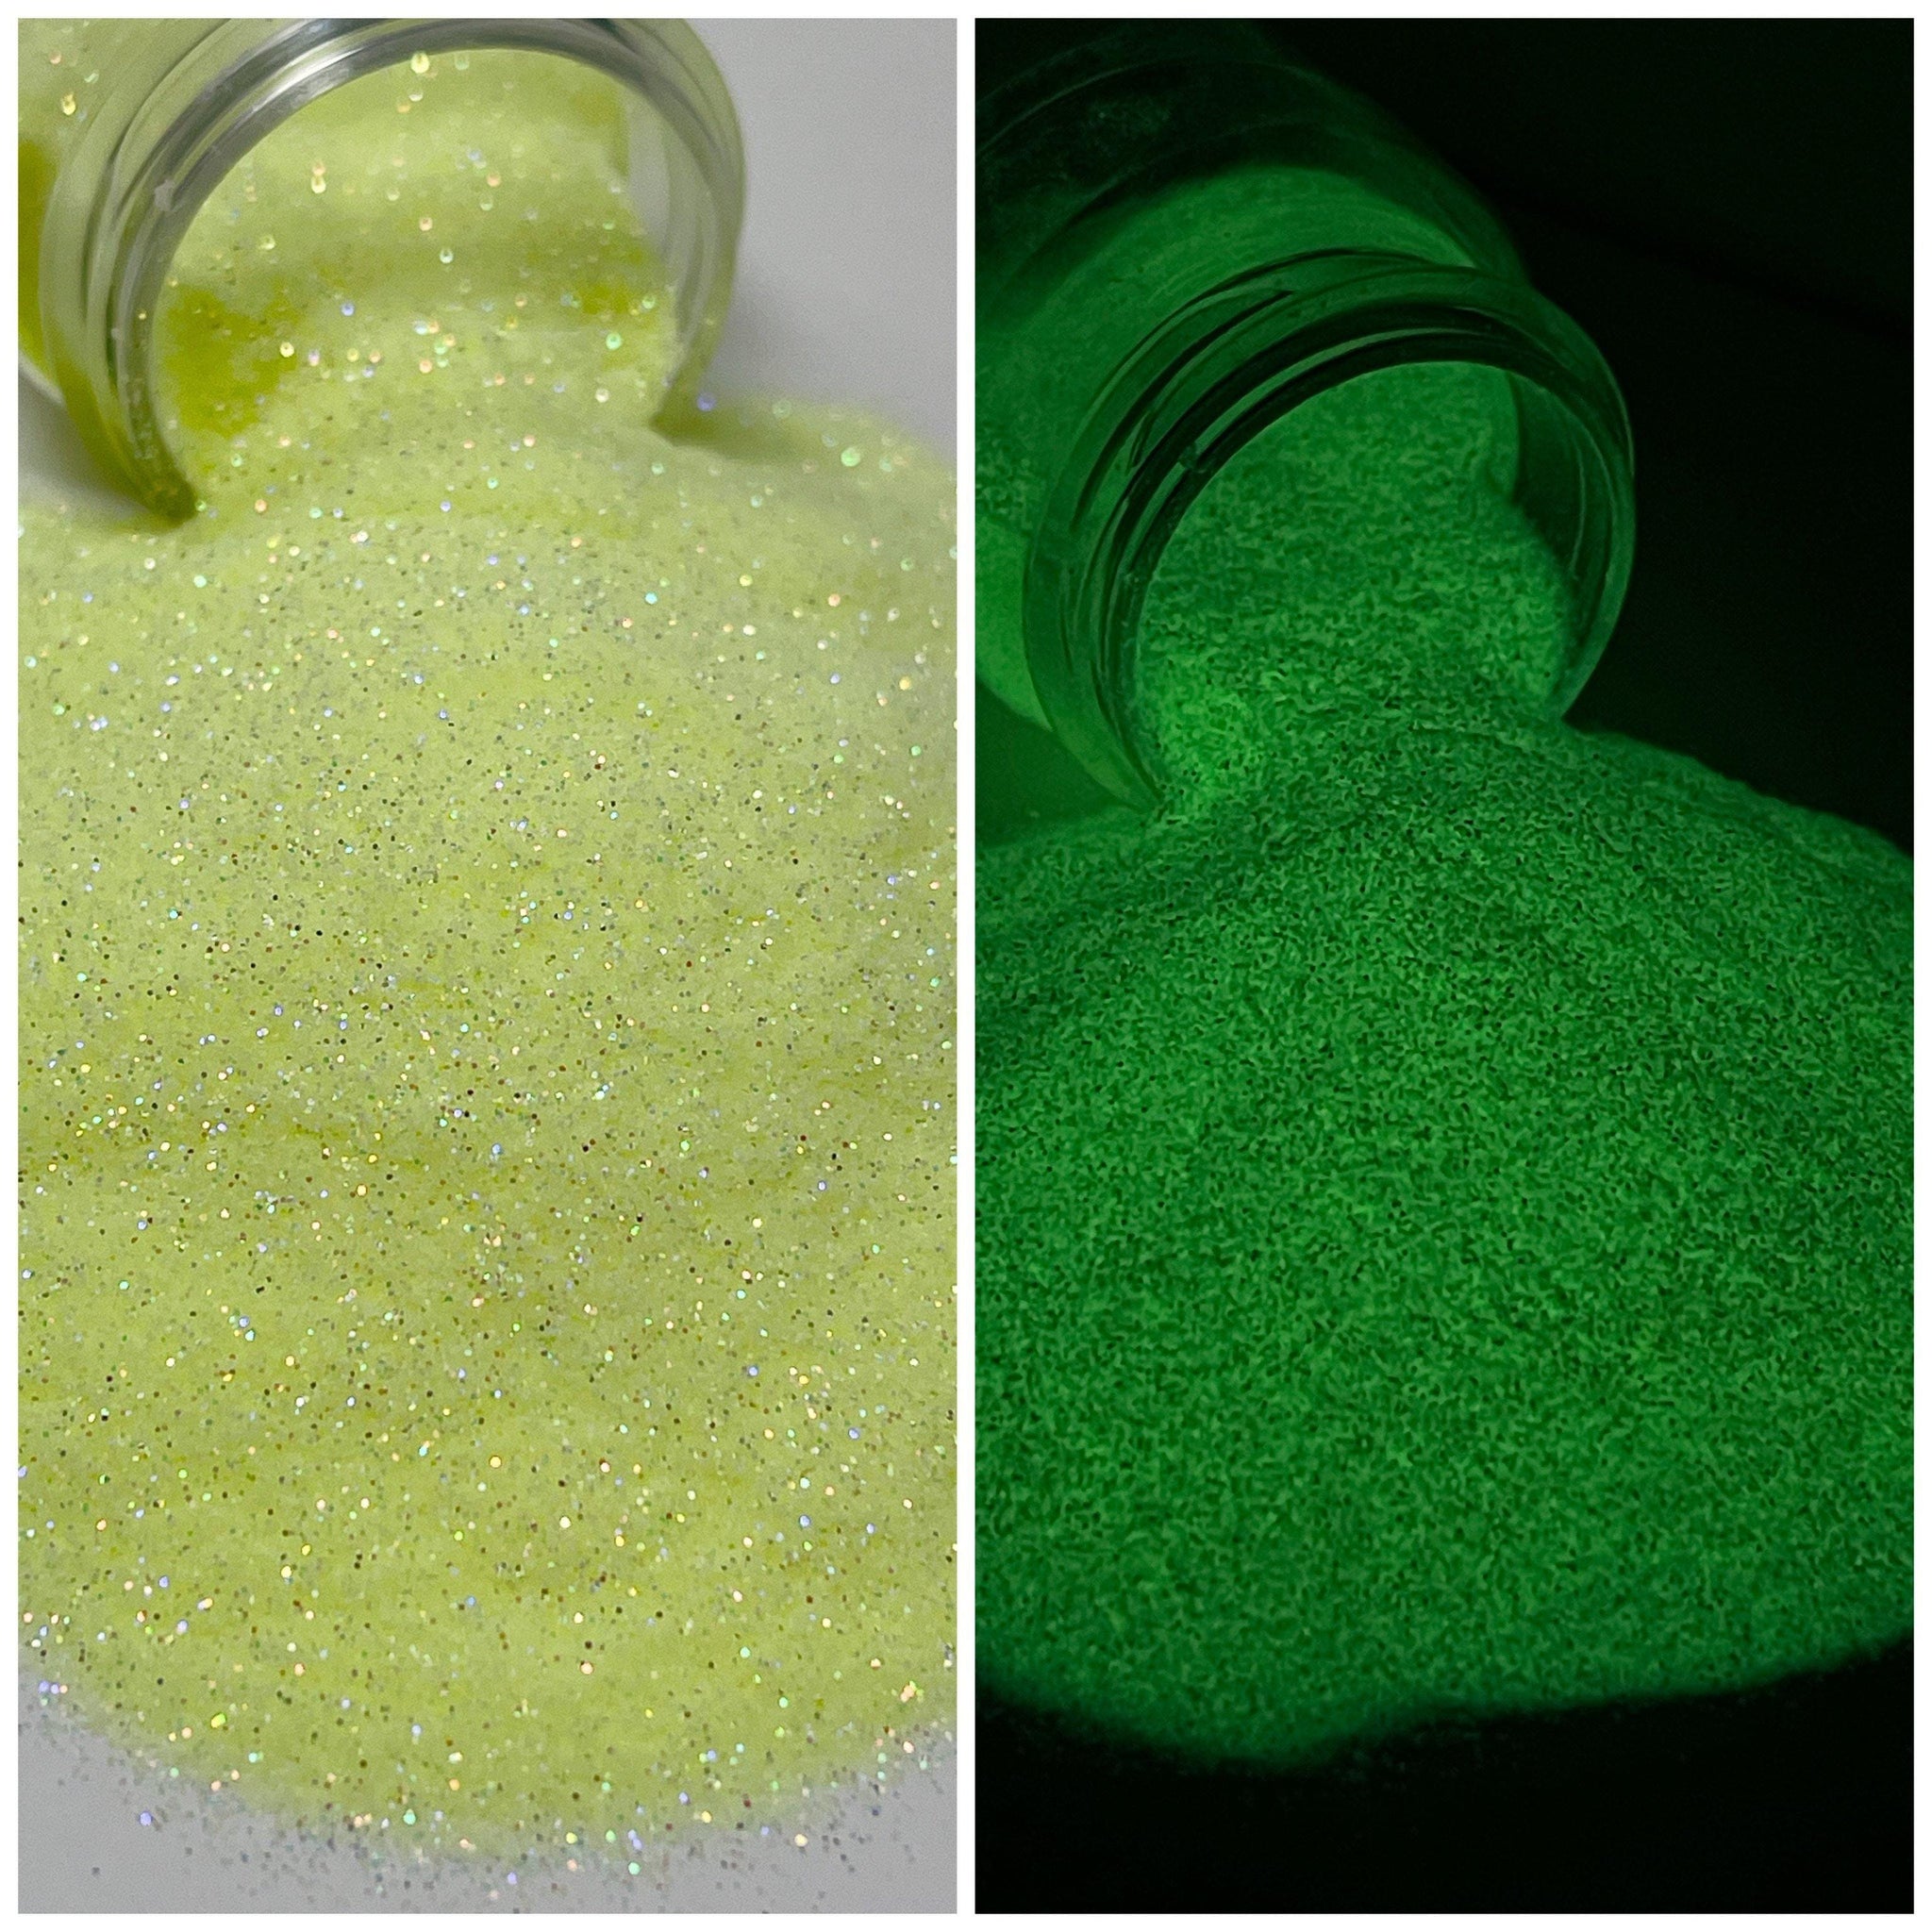 Sulfur - Fine Glow in the Dark Glitter – Glitter Chimp